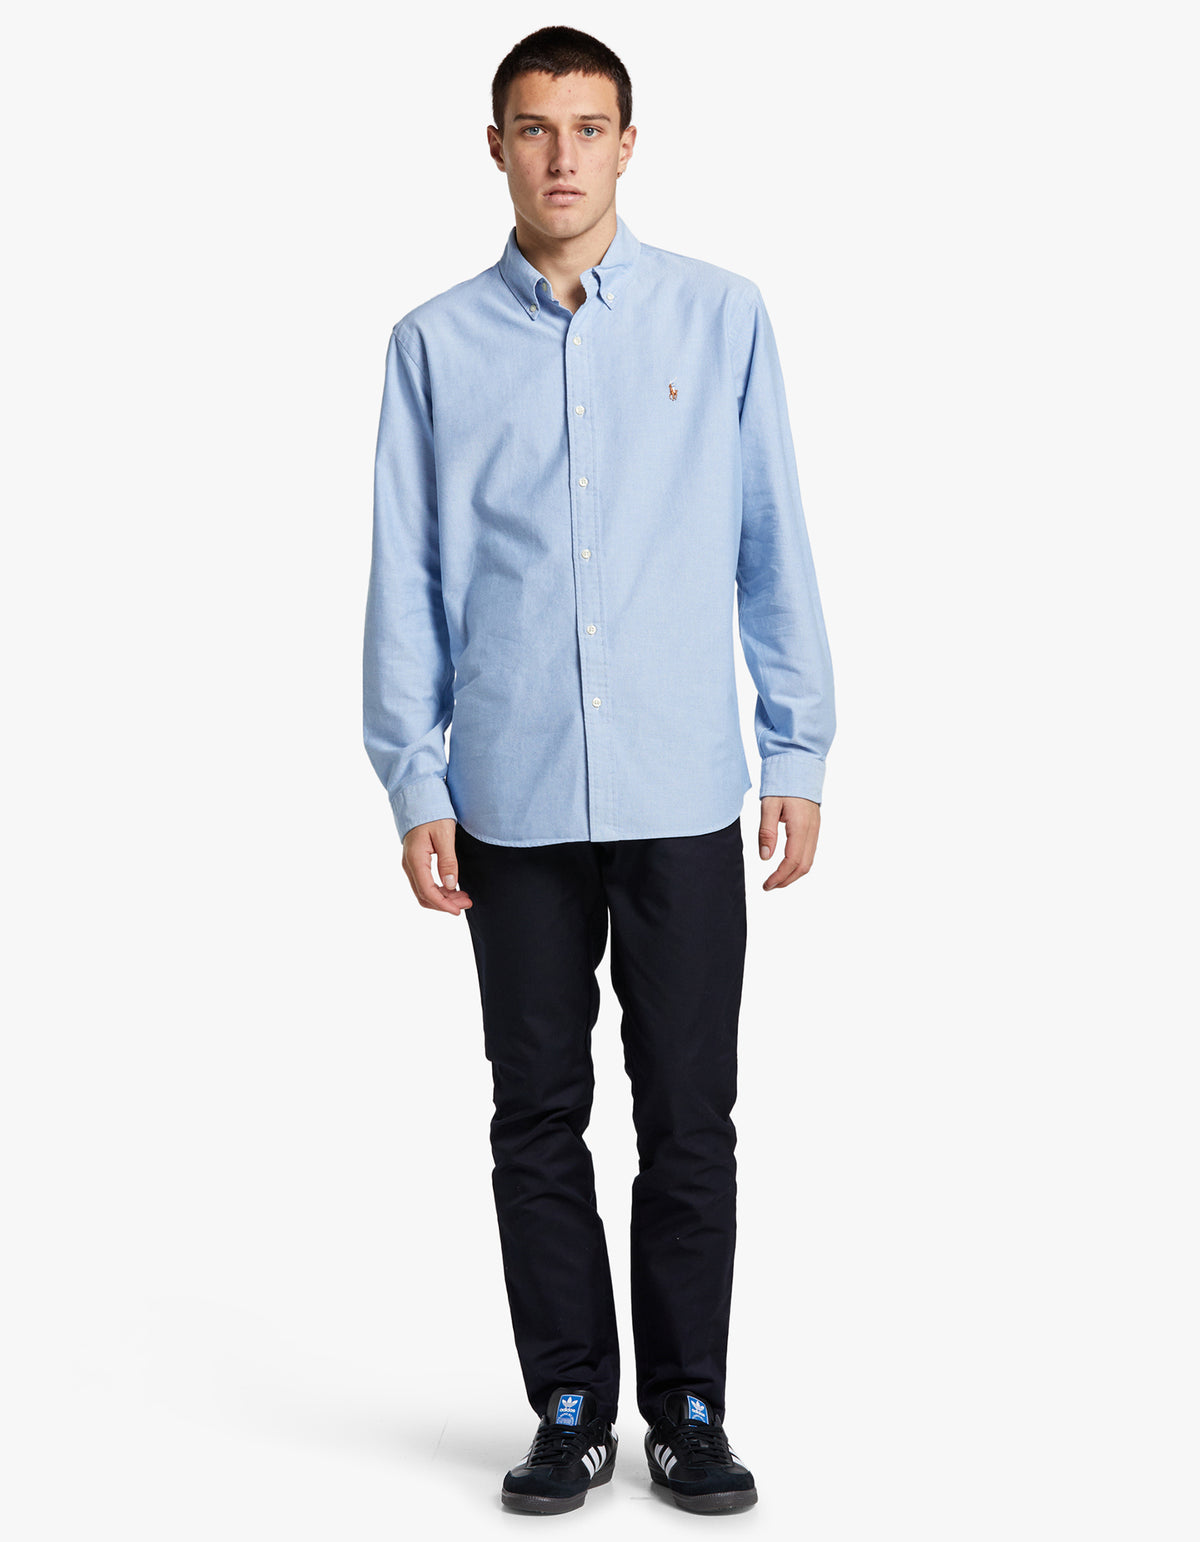 Superette | Custom Fit Oxford Shirt - Blue